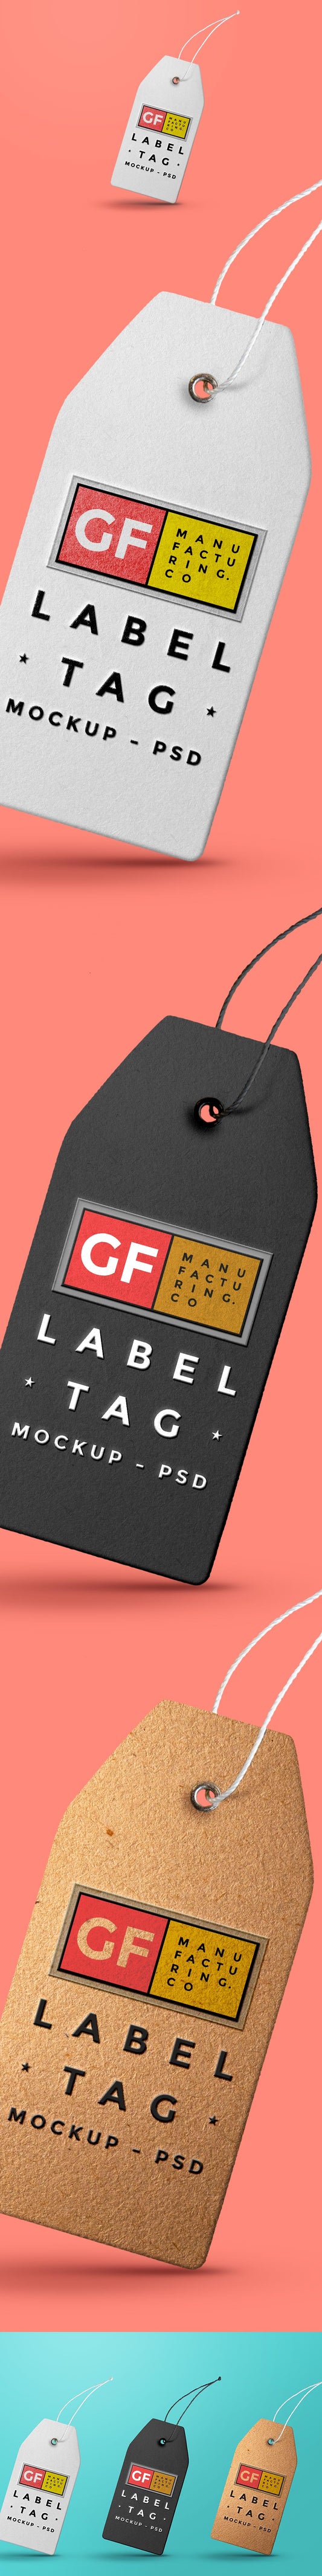 Free Clothing Label Tag Mockup PSD